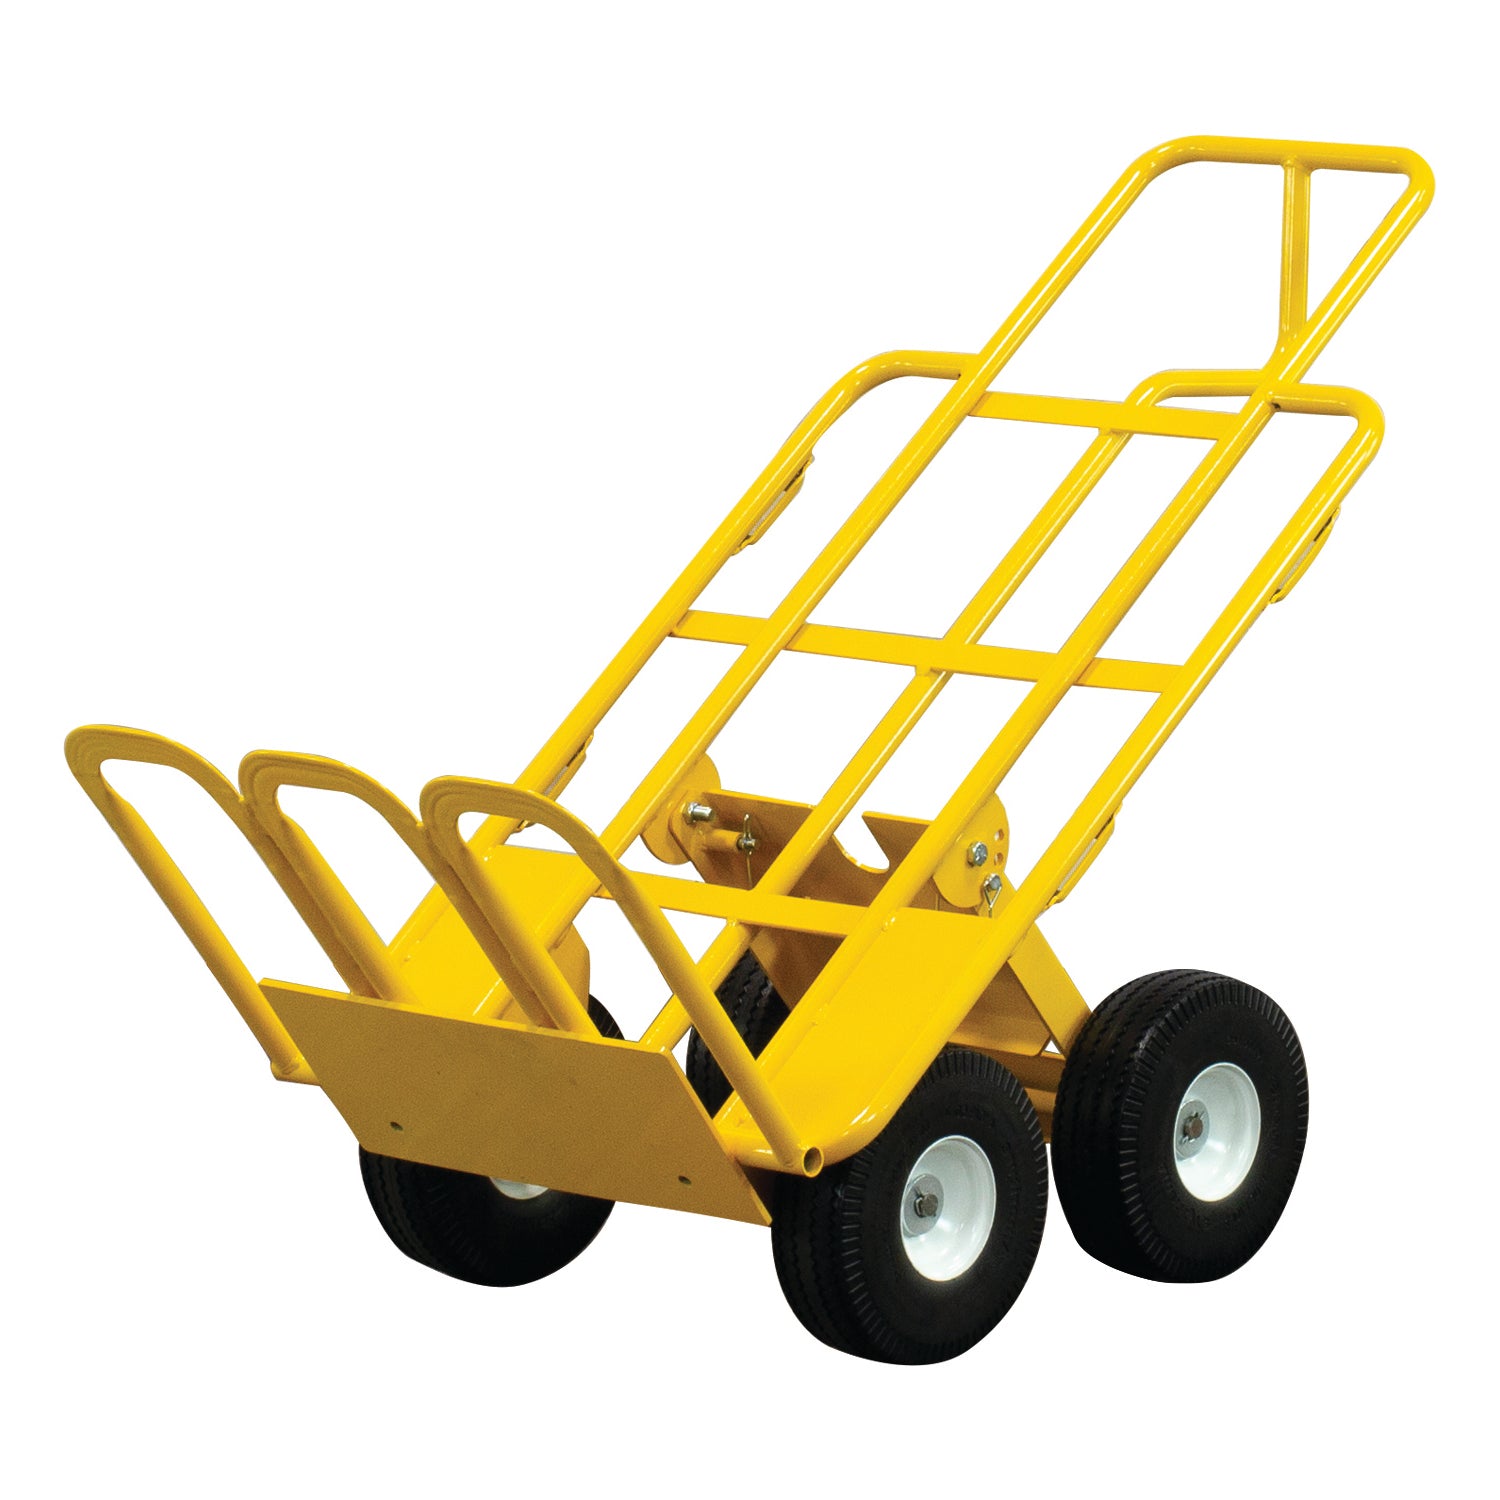 Snap-Loc All-Terrain Hand Cart 4 Wheel 750 lb. Capacity, 10 inch Airless Wheels